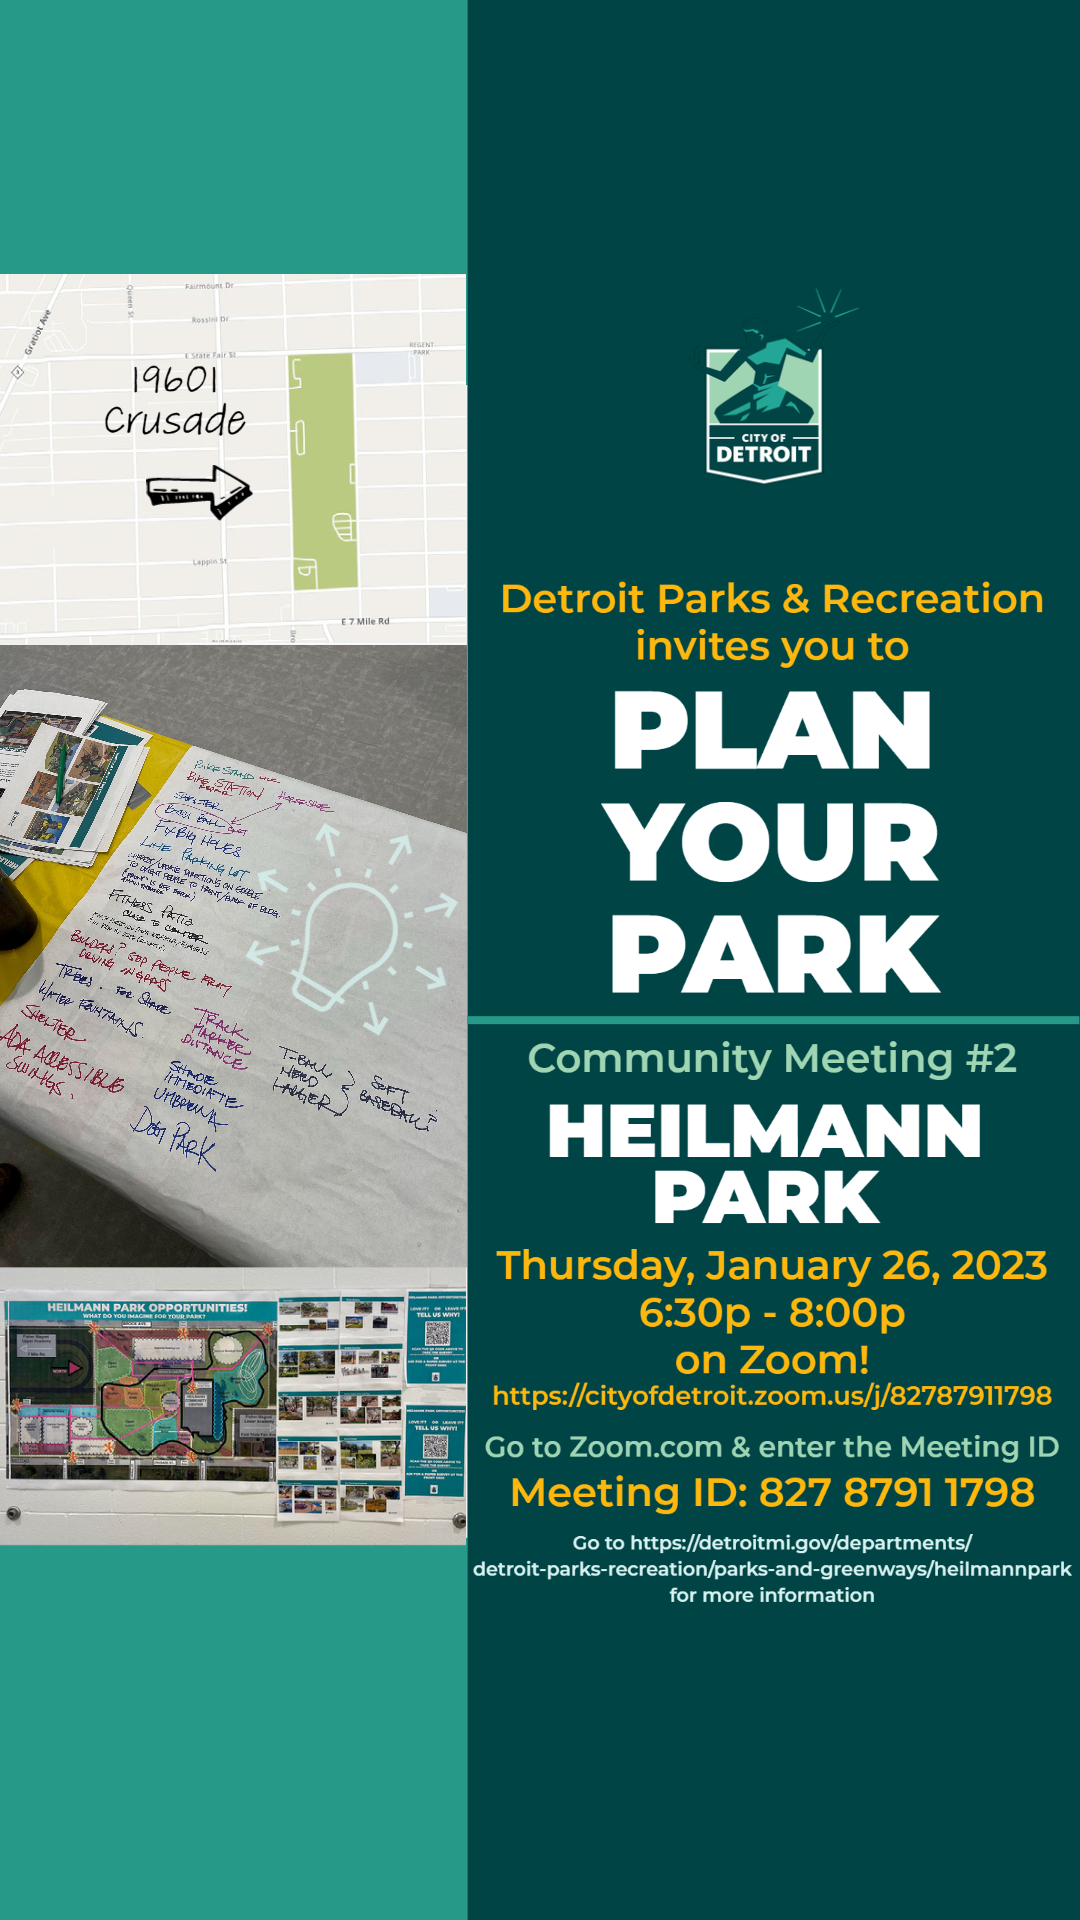 Flyer for Heilmann Park Community Meeting #2 on Jan 26, 2023